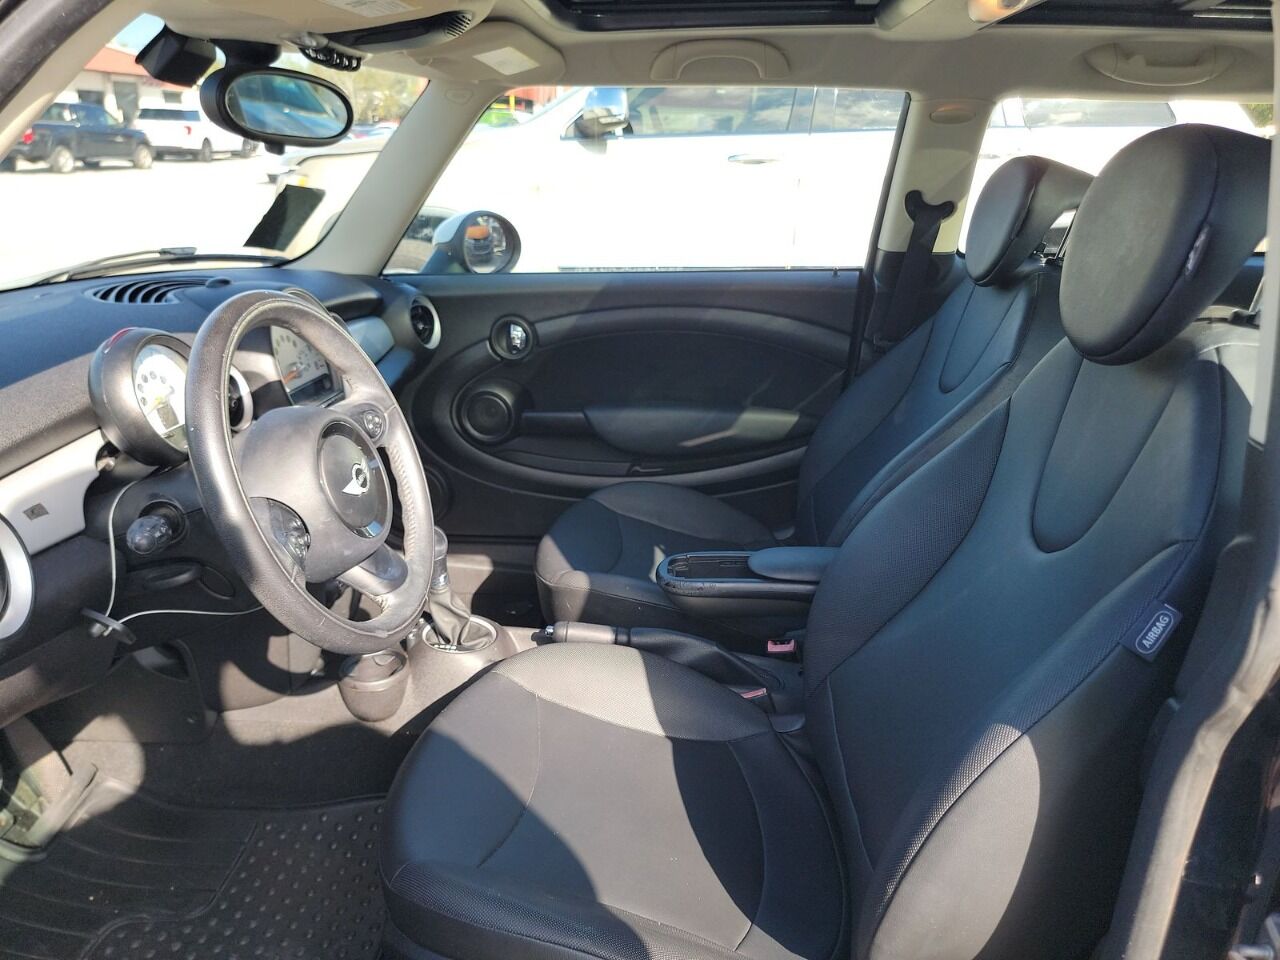 2013 MINI Hardtop Hatchback - $4,995